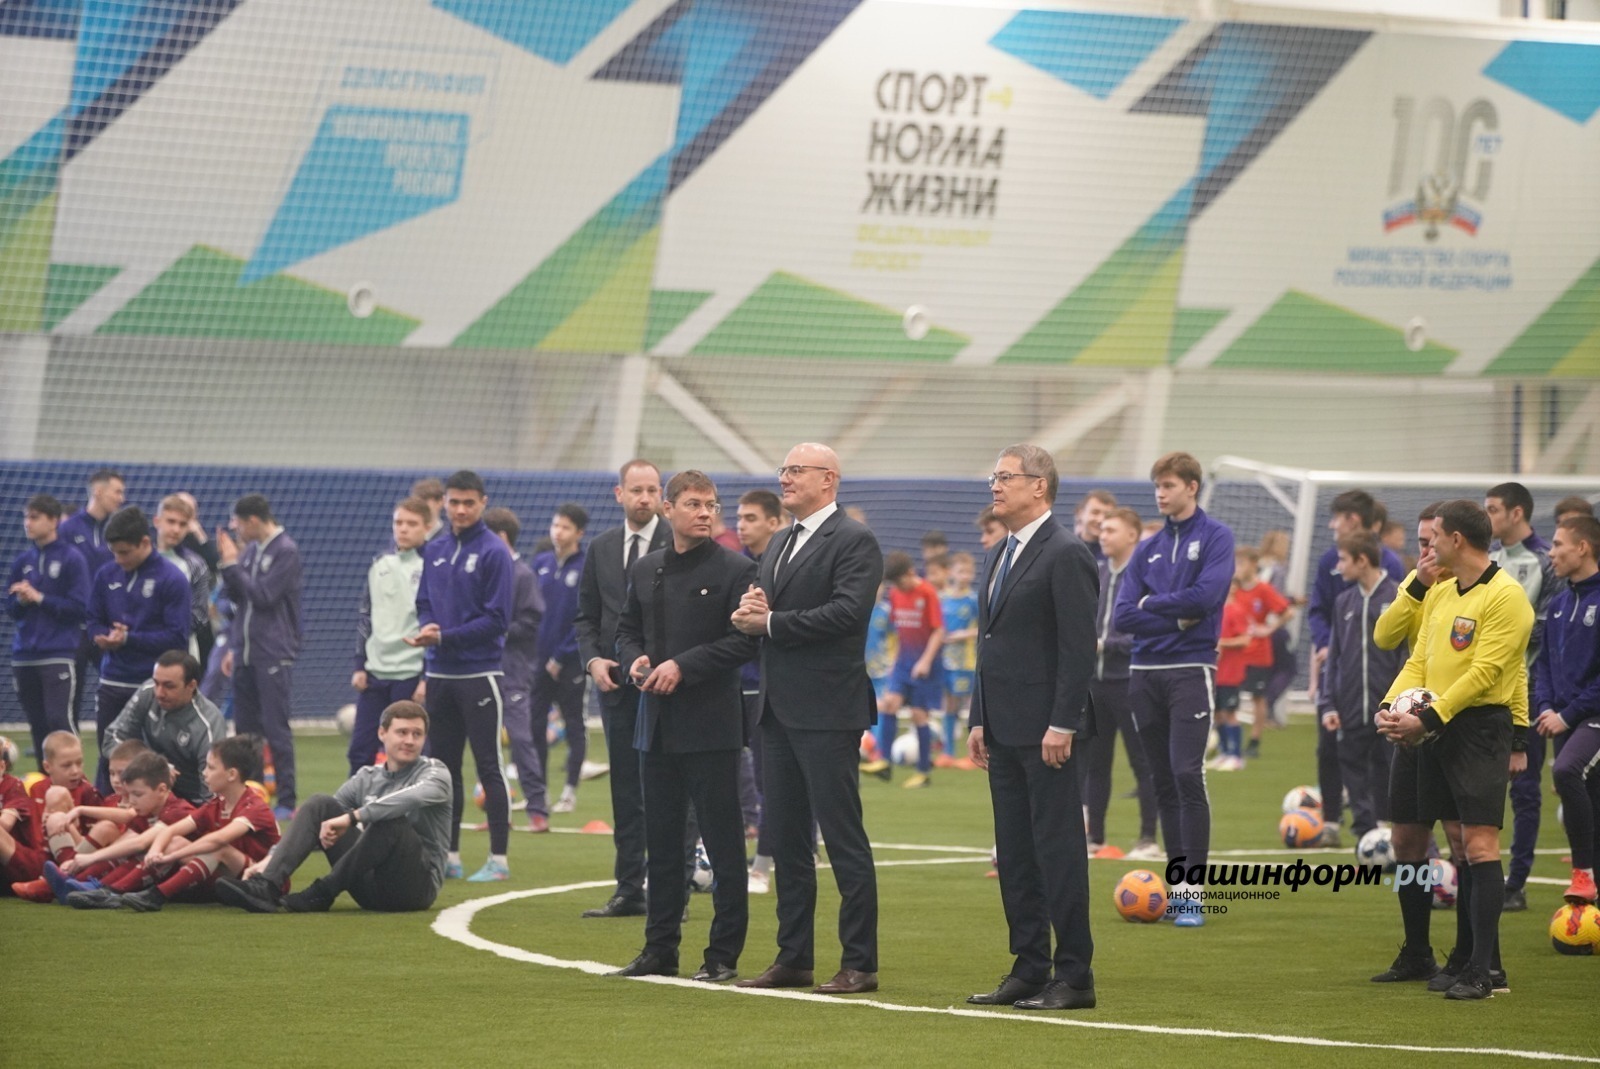 Дмитрий Чернышенко Өфөлә яңы футбол манежын асыуҙа ҡатнашты